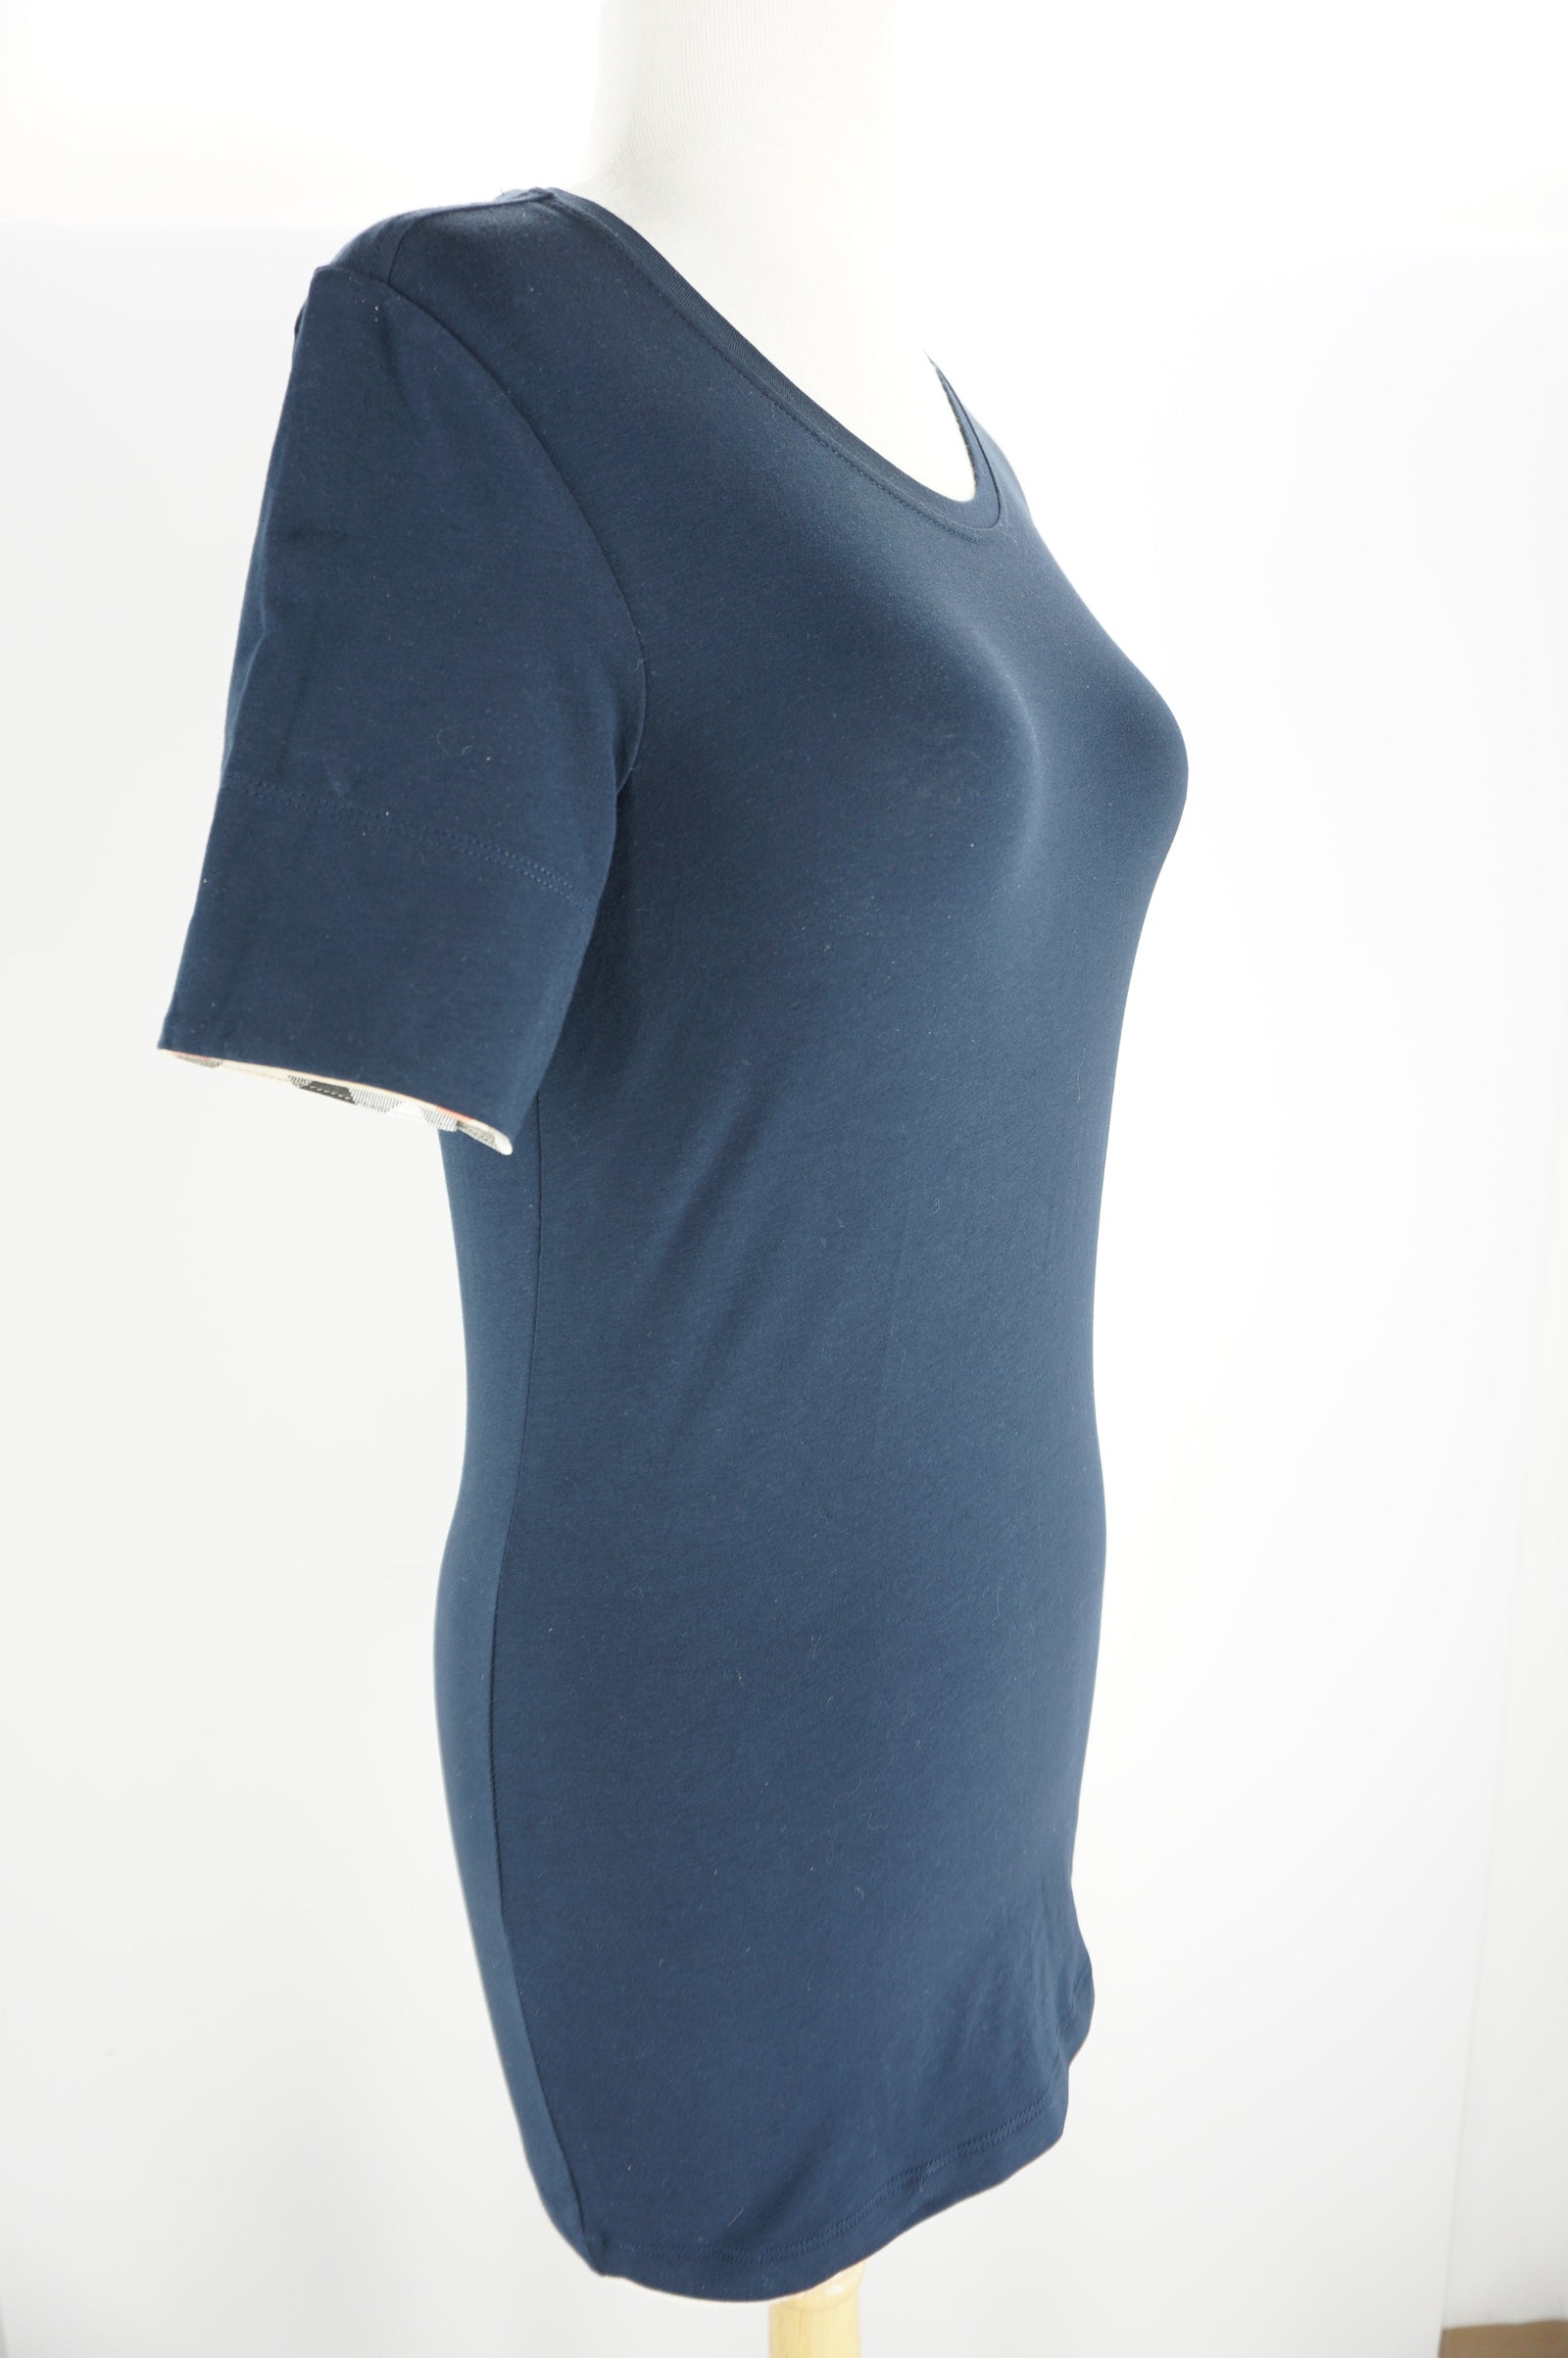 Burberry Brit Check Trim Short Sleeve Womens Tee Shirt $140 New